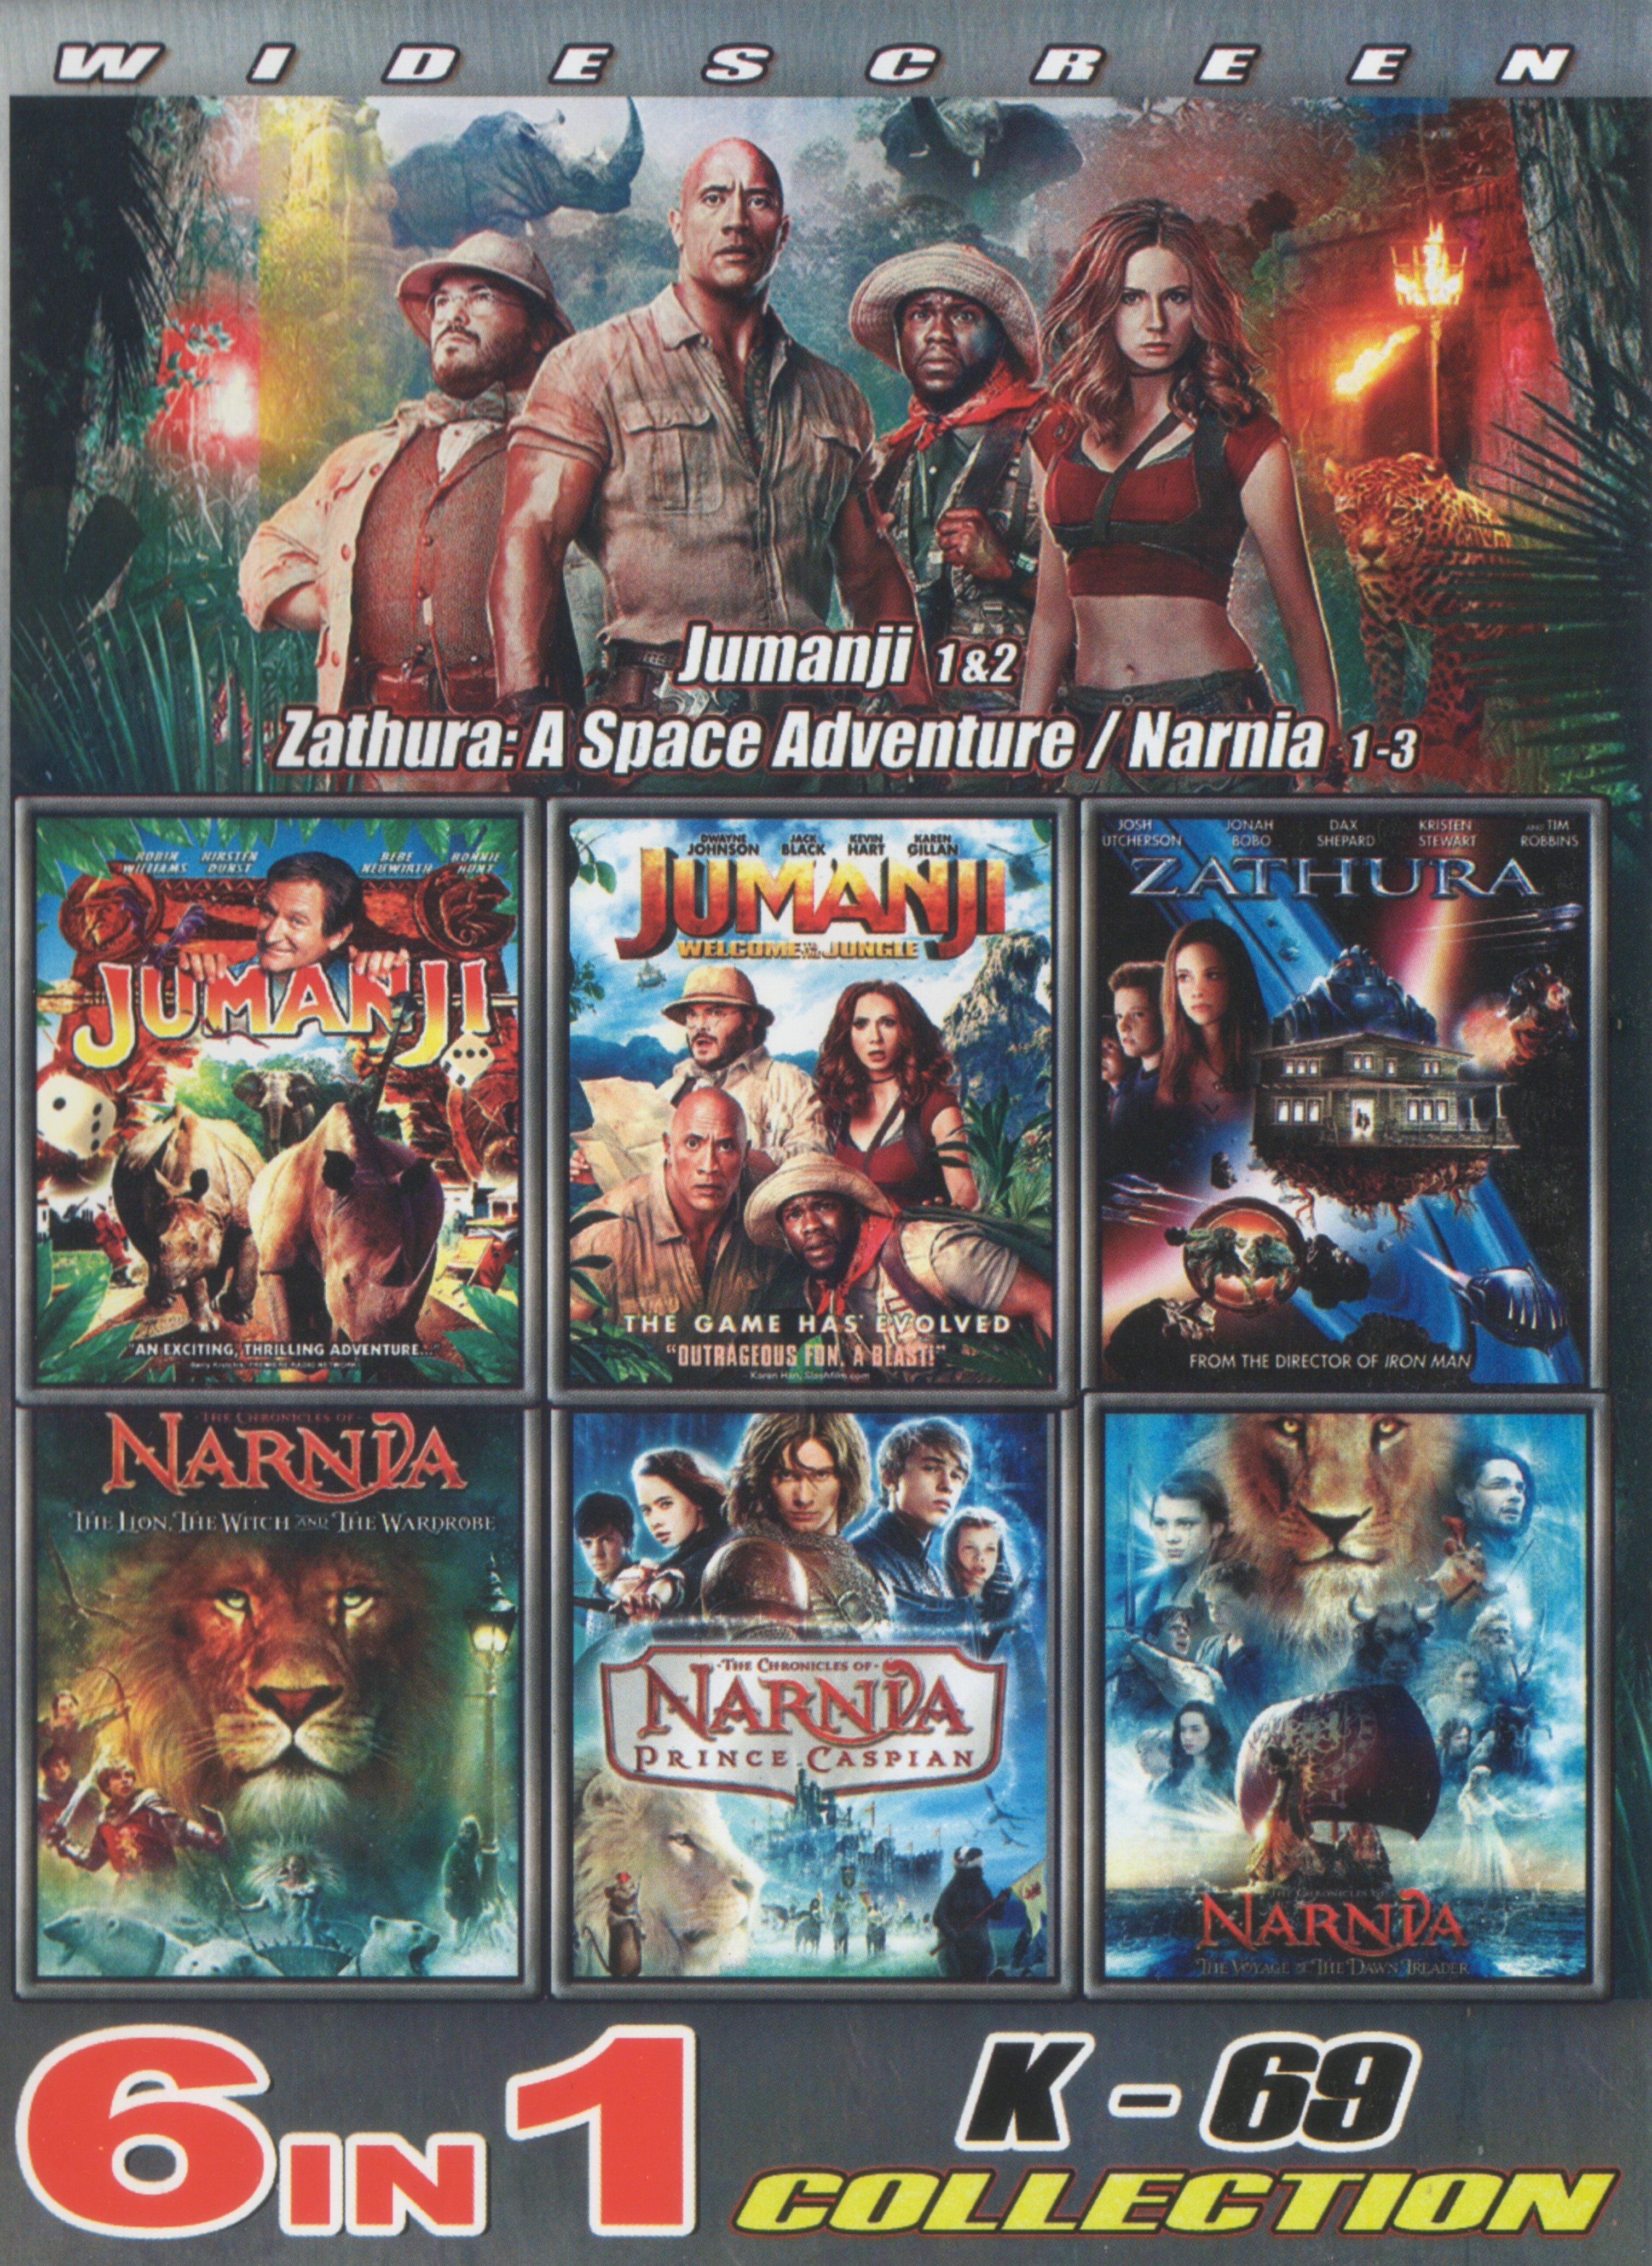 DVD English Movie Jumanji & Narnia 6 In 1 Collection K 69 - Movieland682786  | Lazada